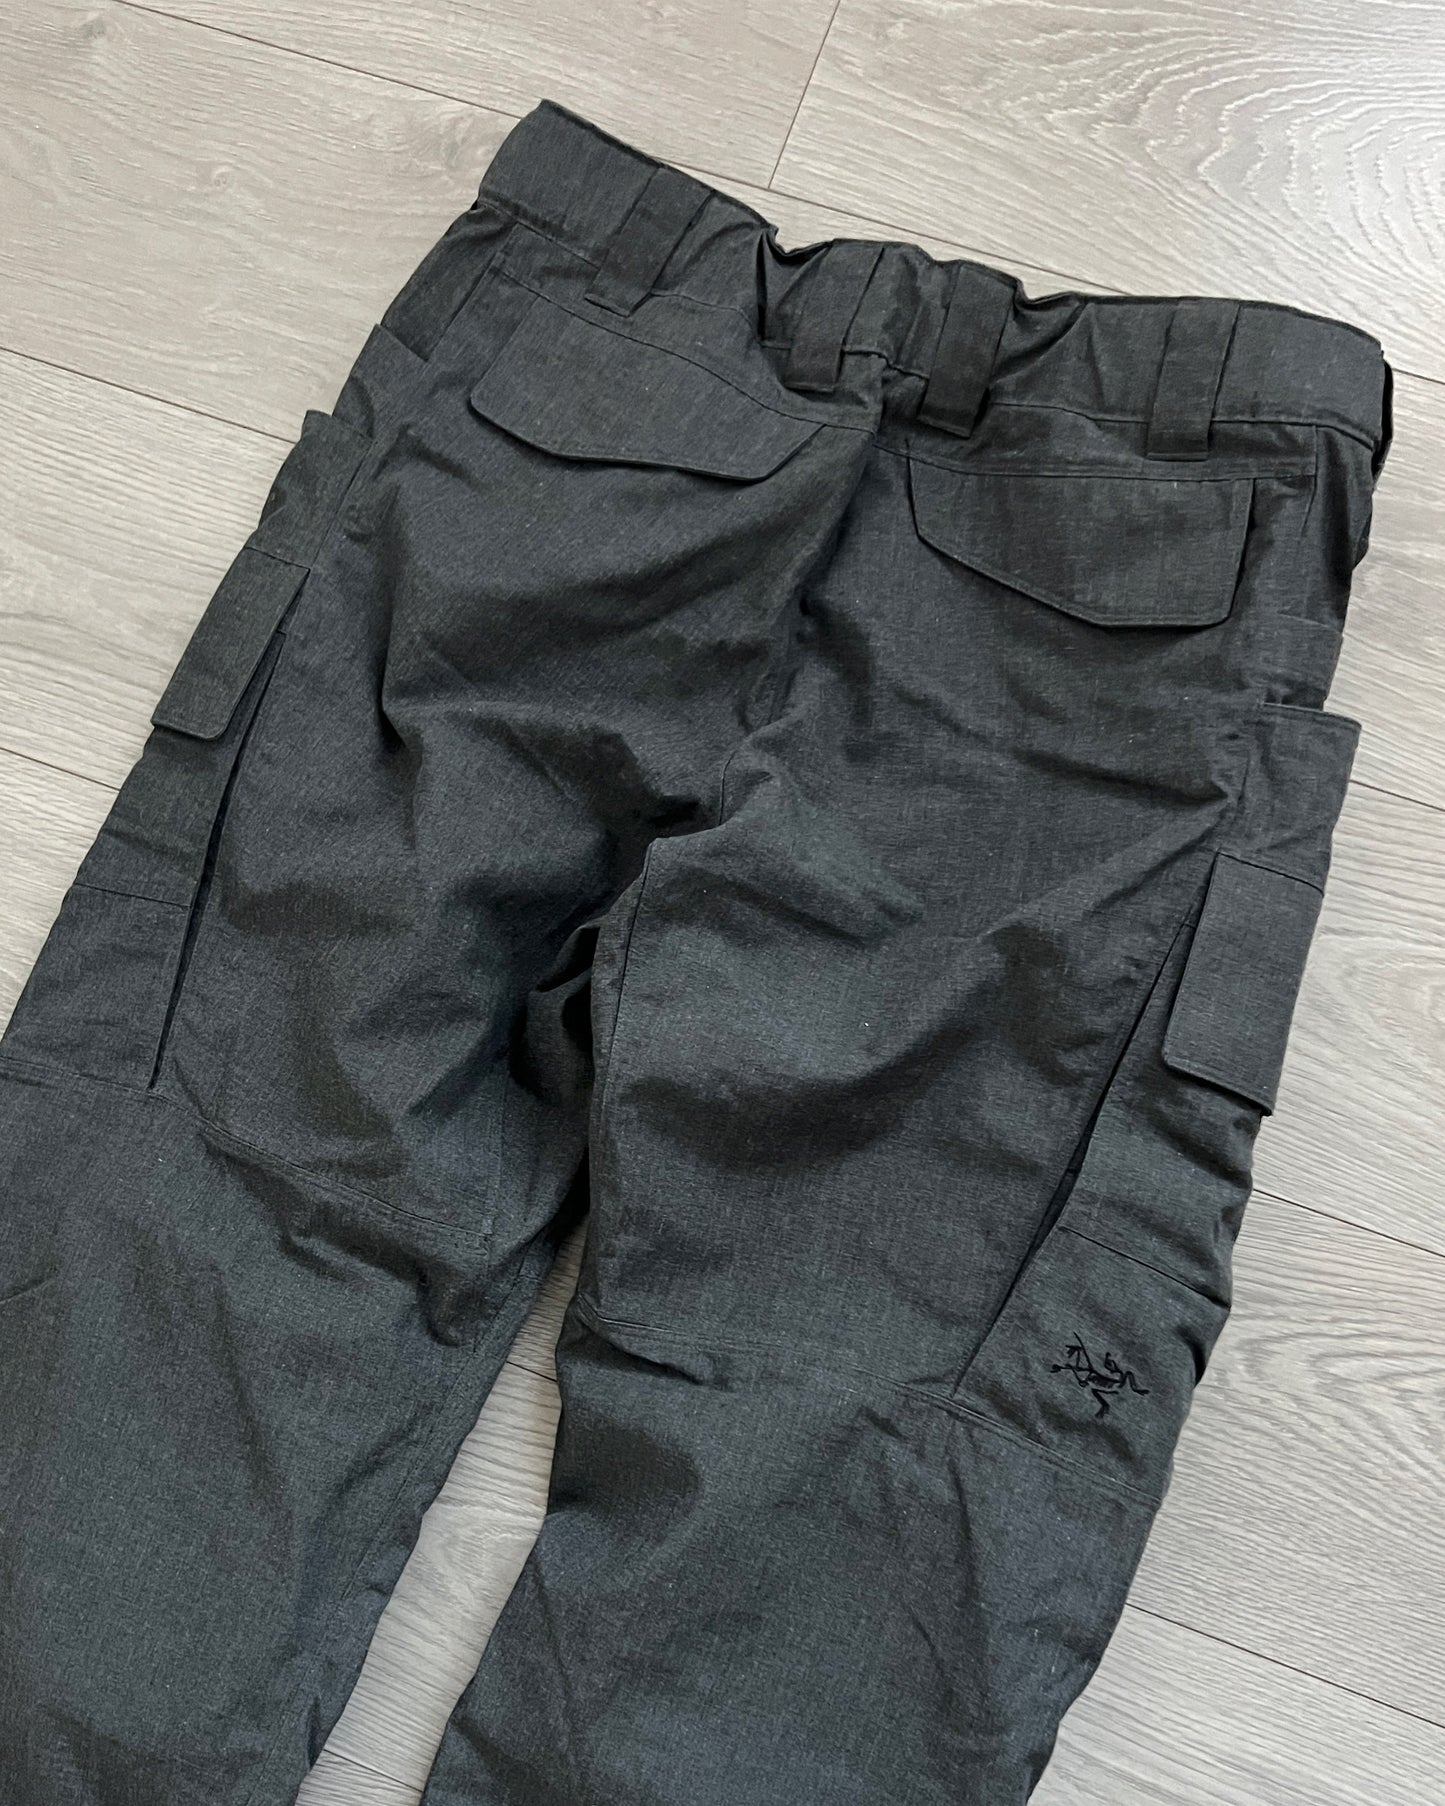 Arcteryx LEAF Assault FR Pants in Wolf Grey, Made in El Salvador - Size M, L & XL